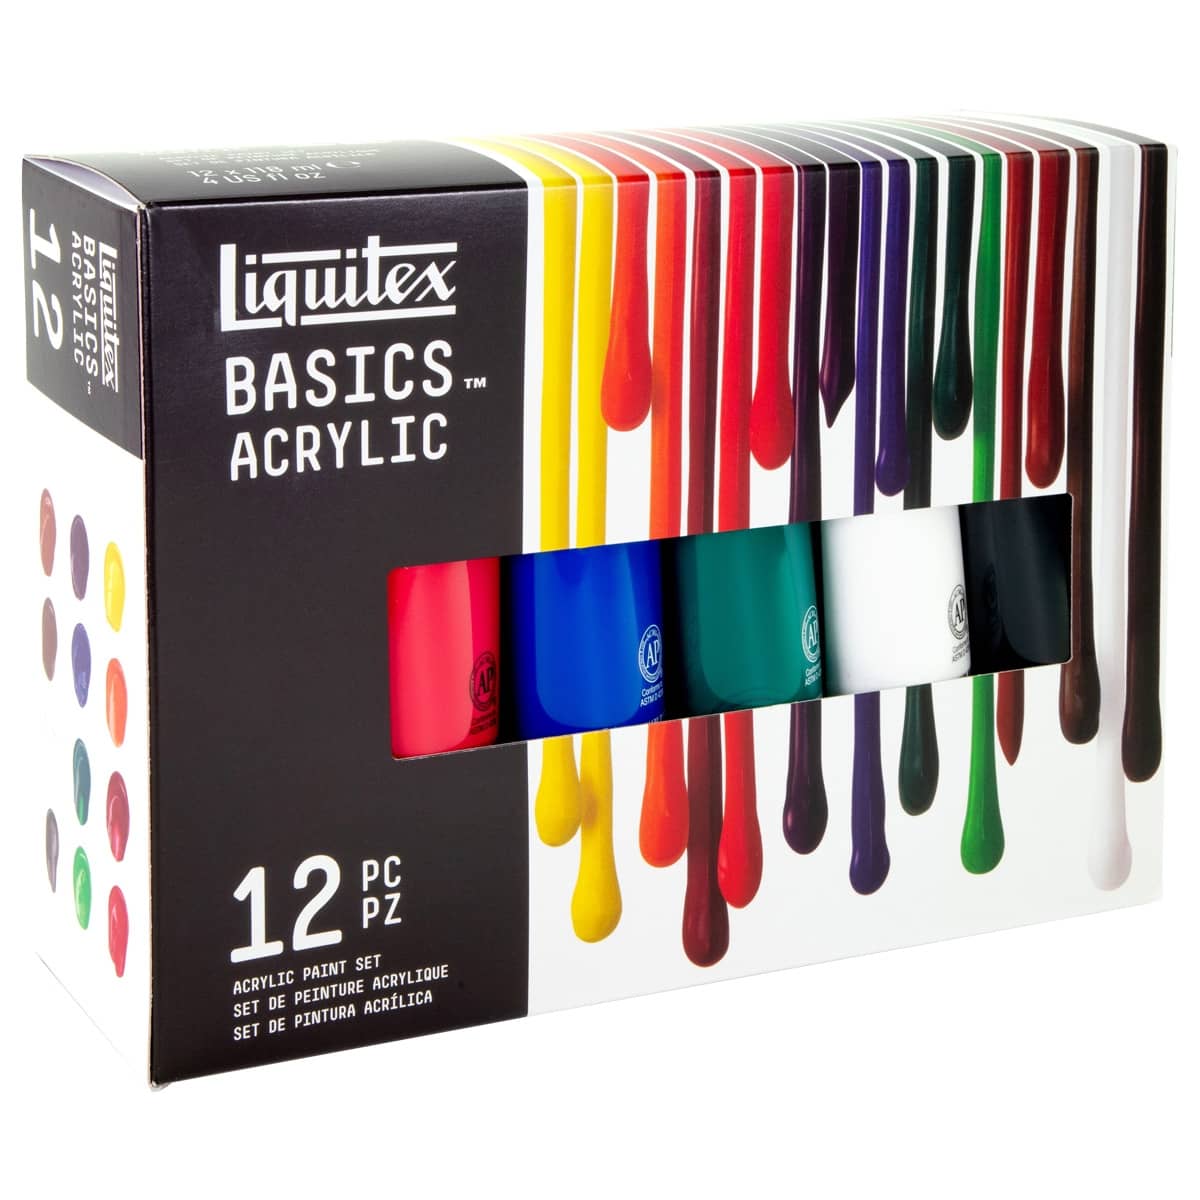 Liquitex BASICS Acrylic Set of 12